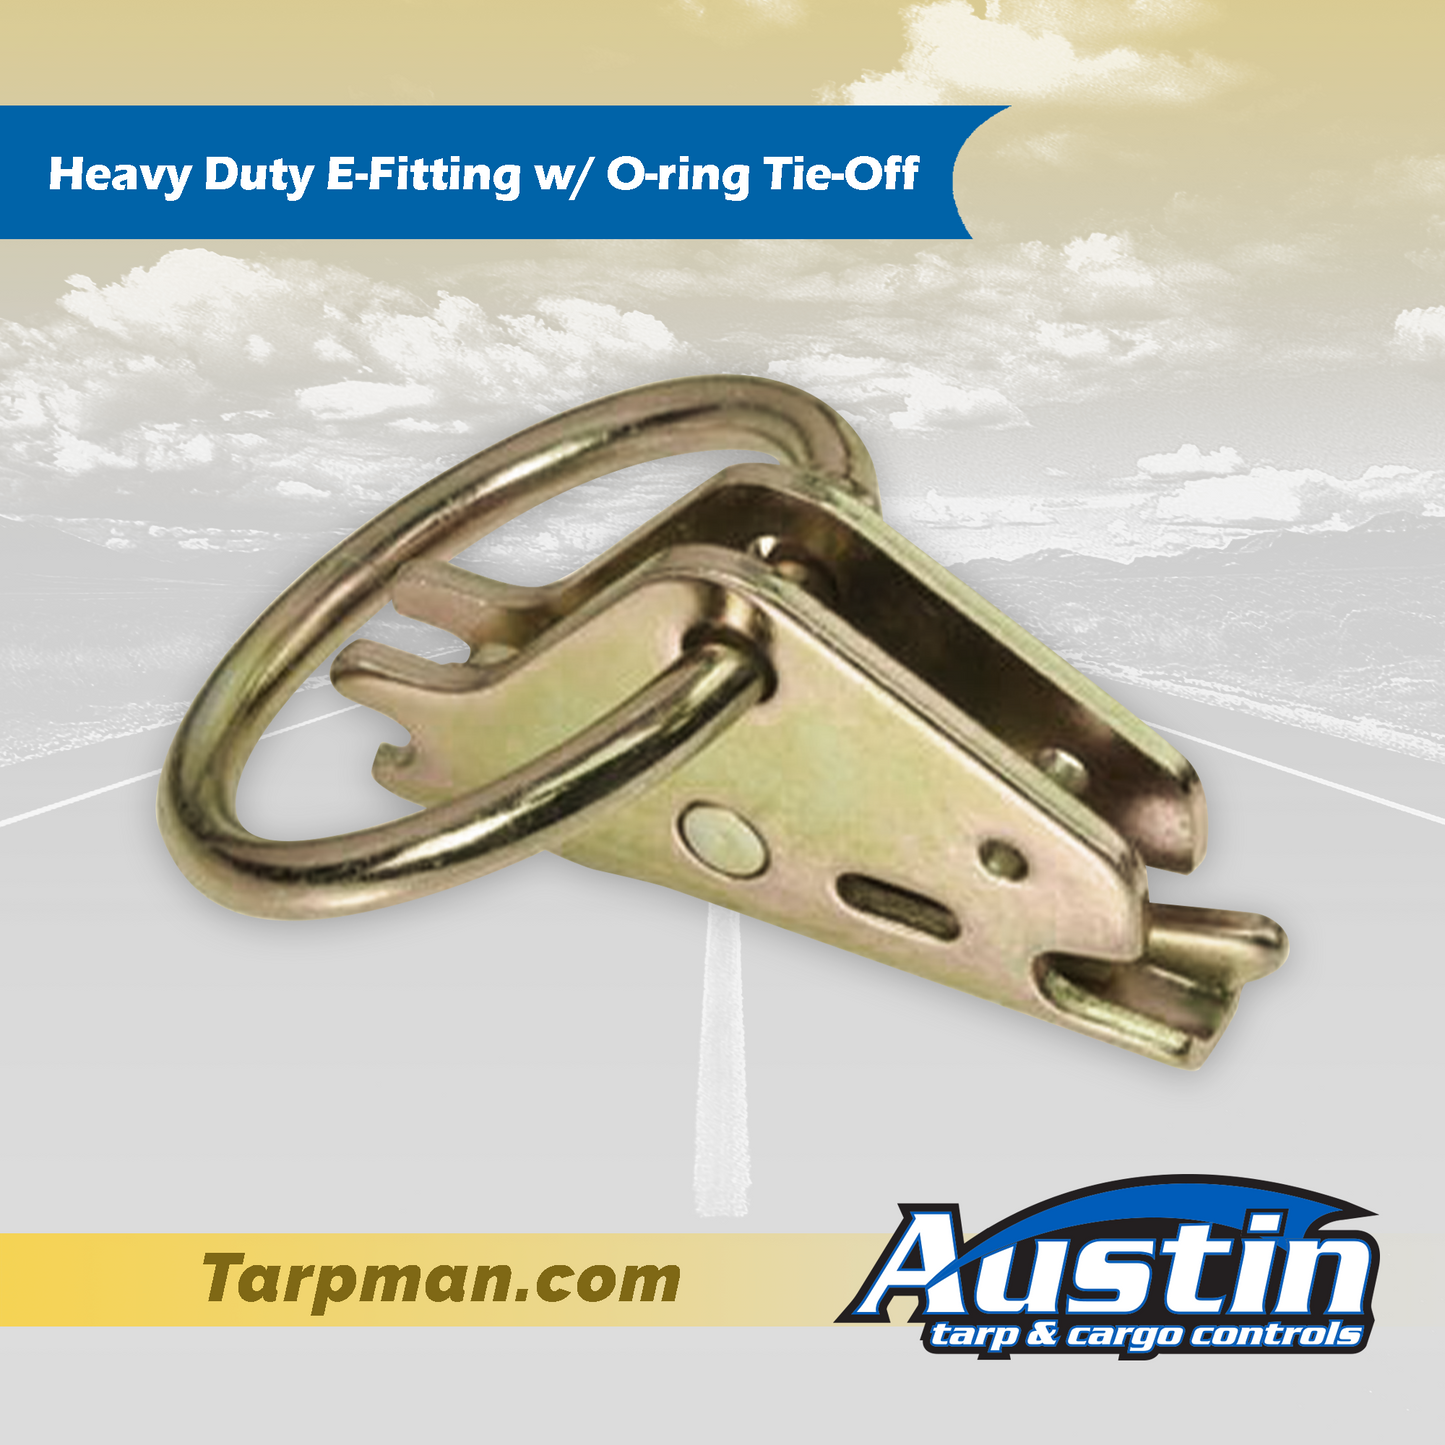 Heavy Duty E-Fitting w/ O-ring Tie-Off